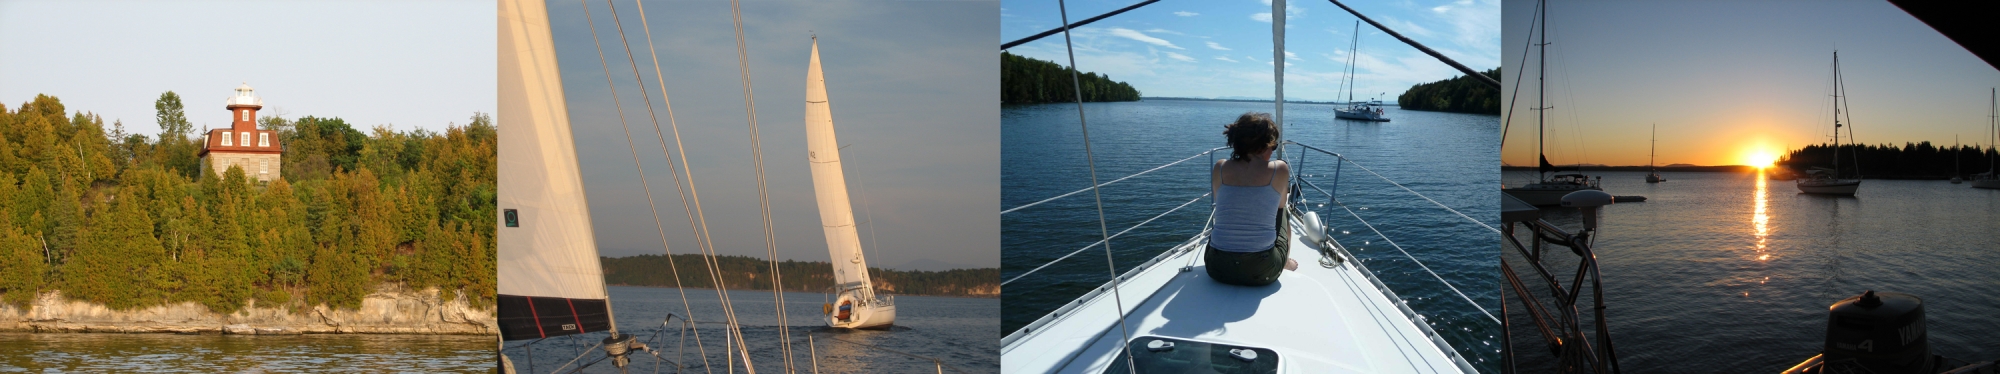 Lake Champlain Bareboat Charter Sailboat Rental Burlington Vermont Navtours